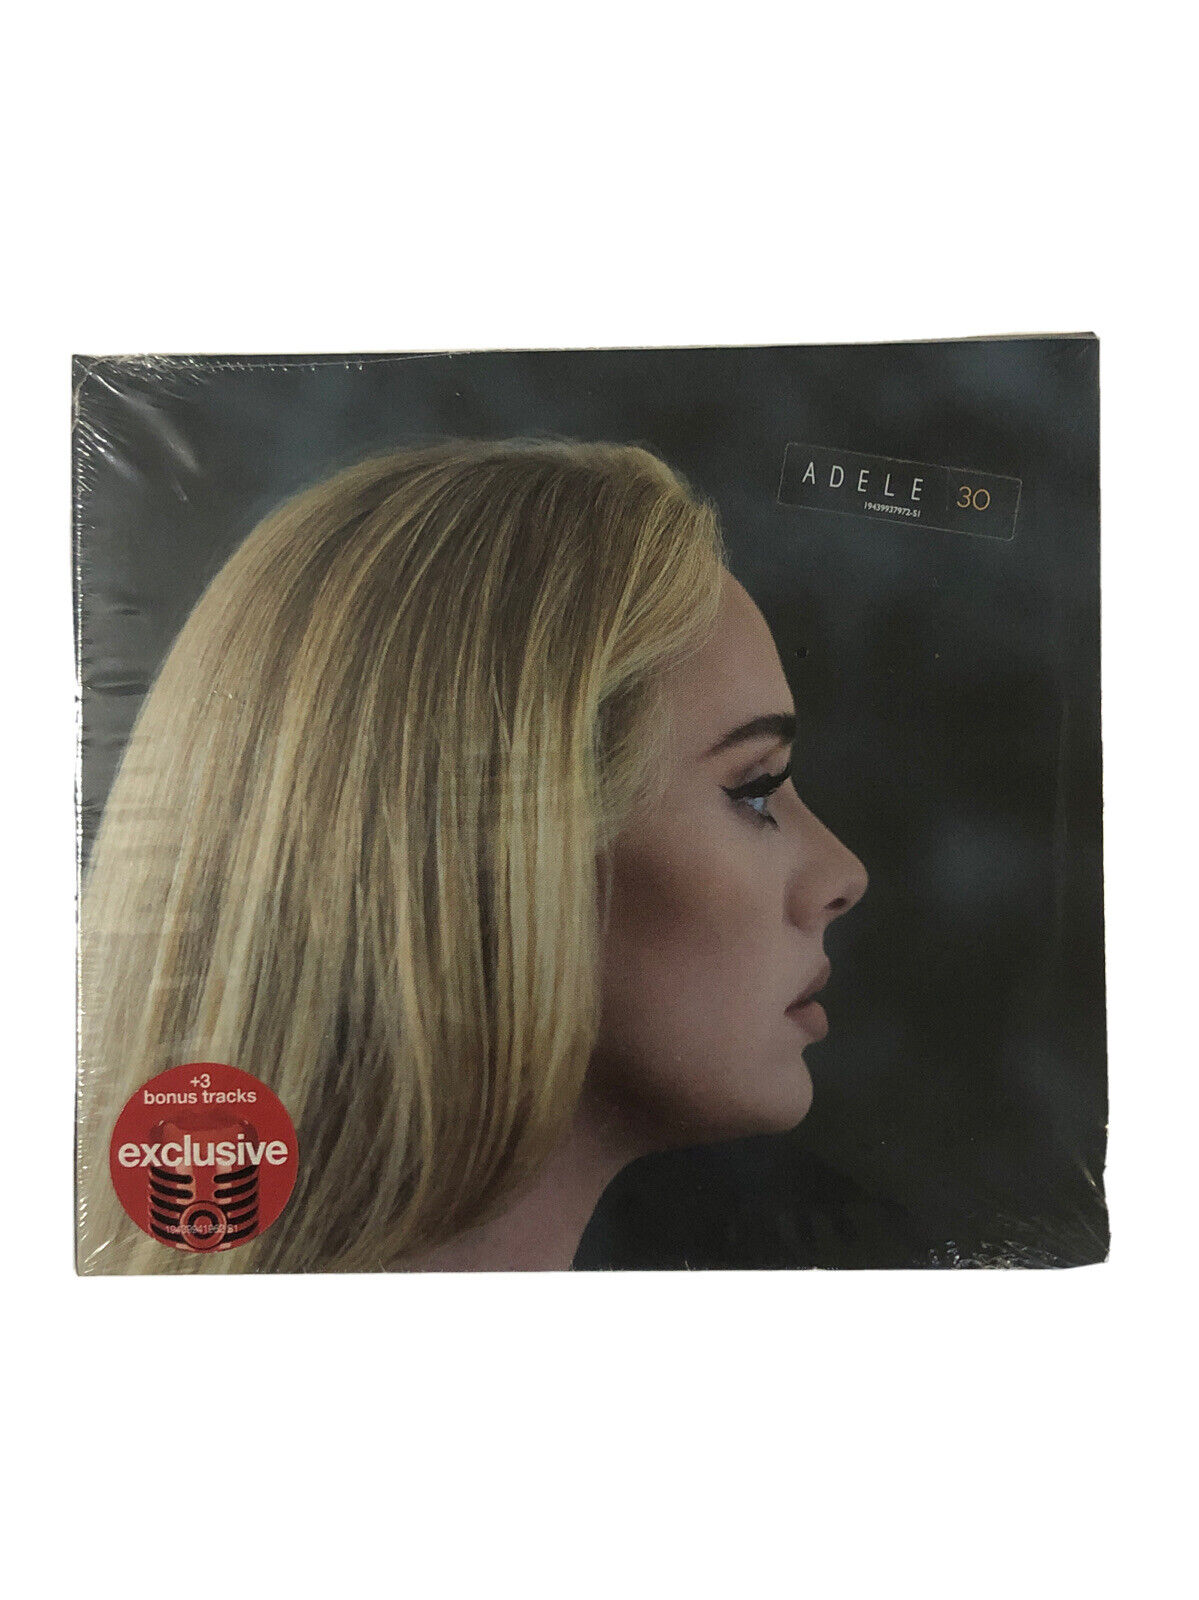 Adele 30 CD 2021 Target Exclusive [3 Bonus Tracks] NEW, SEALED Chris Stapleton￼